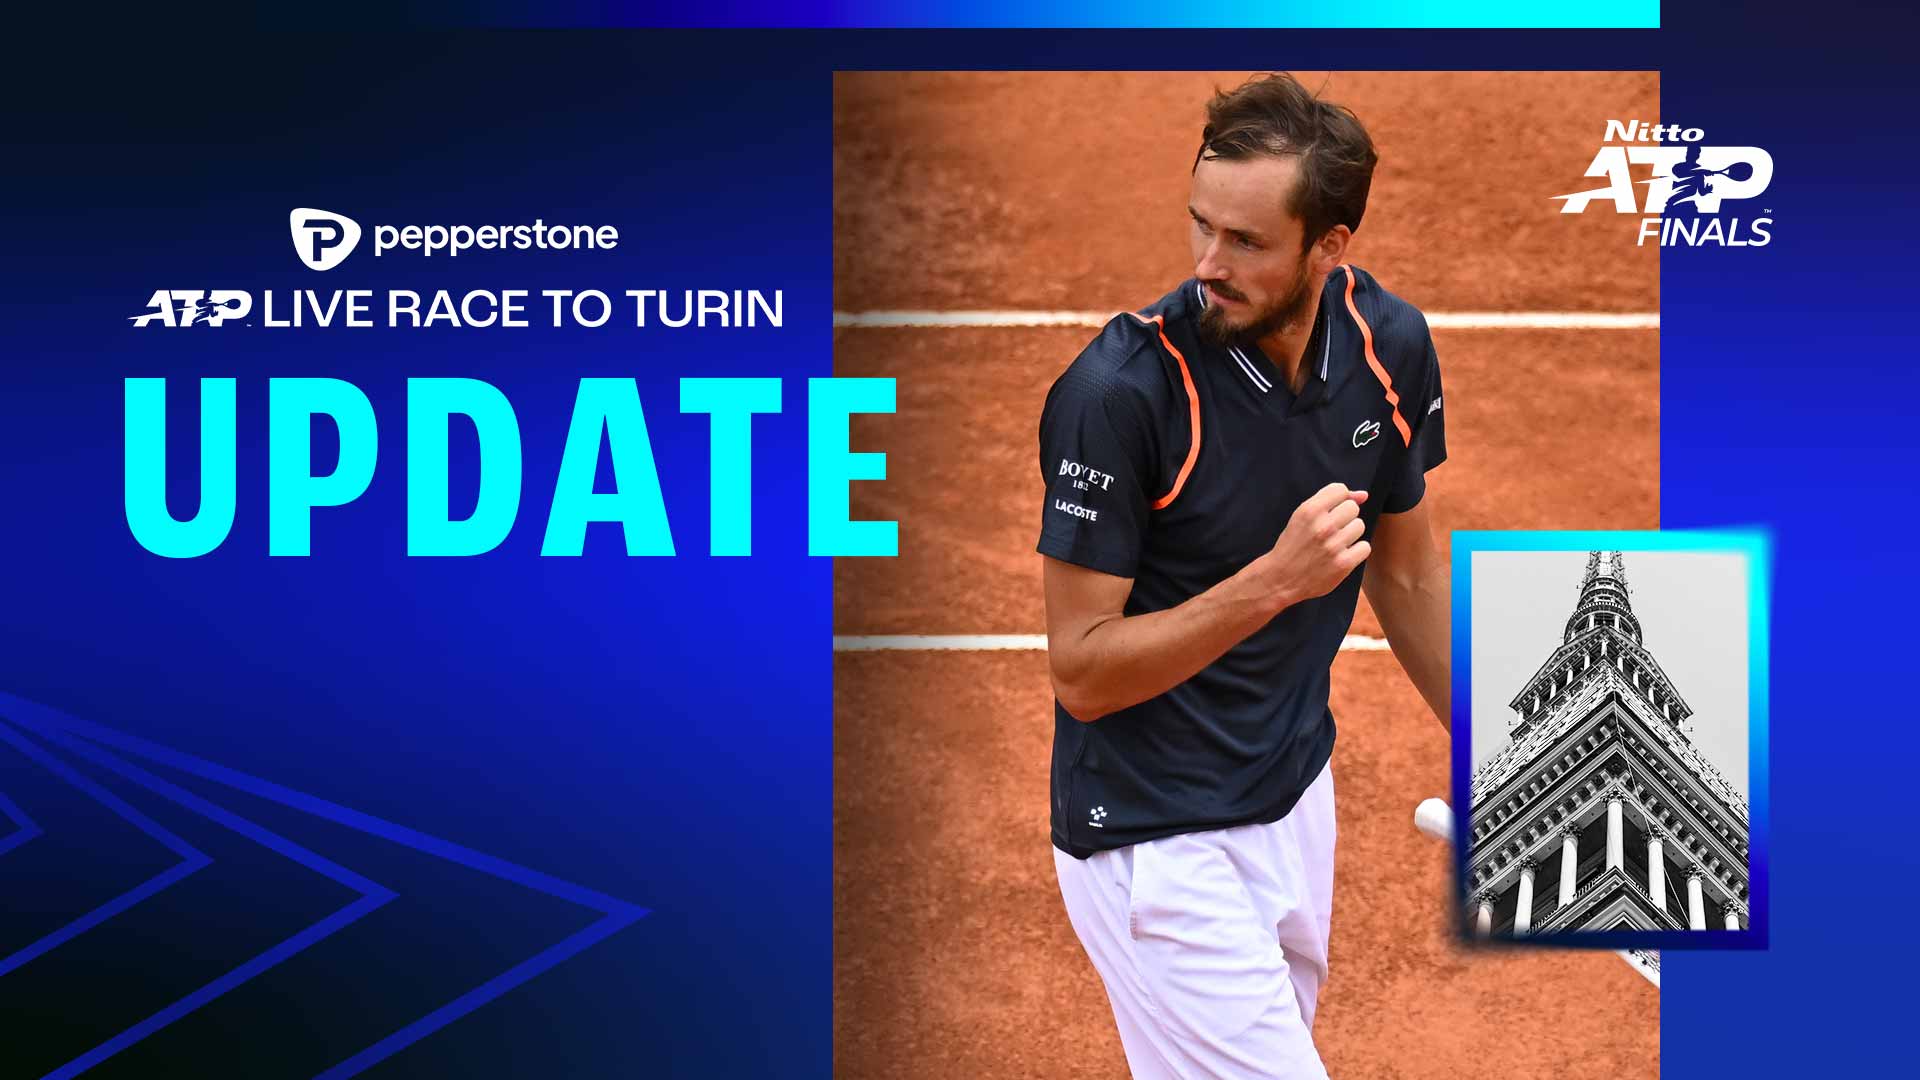 ATP Masters 1000 Rome Overview ATP Tour Tennis